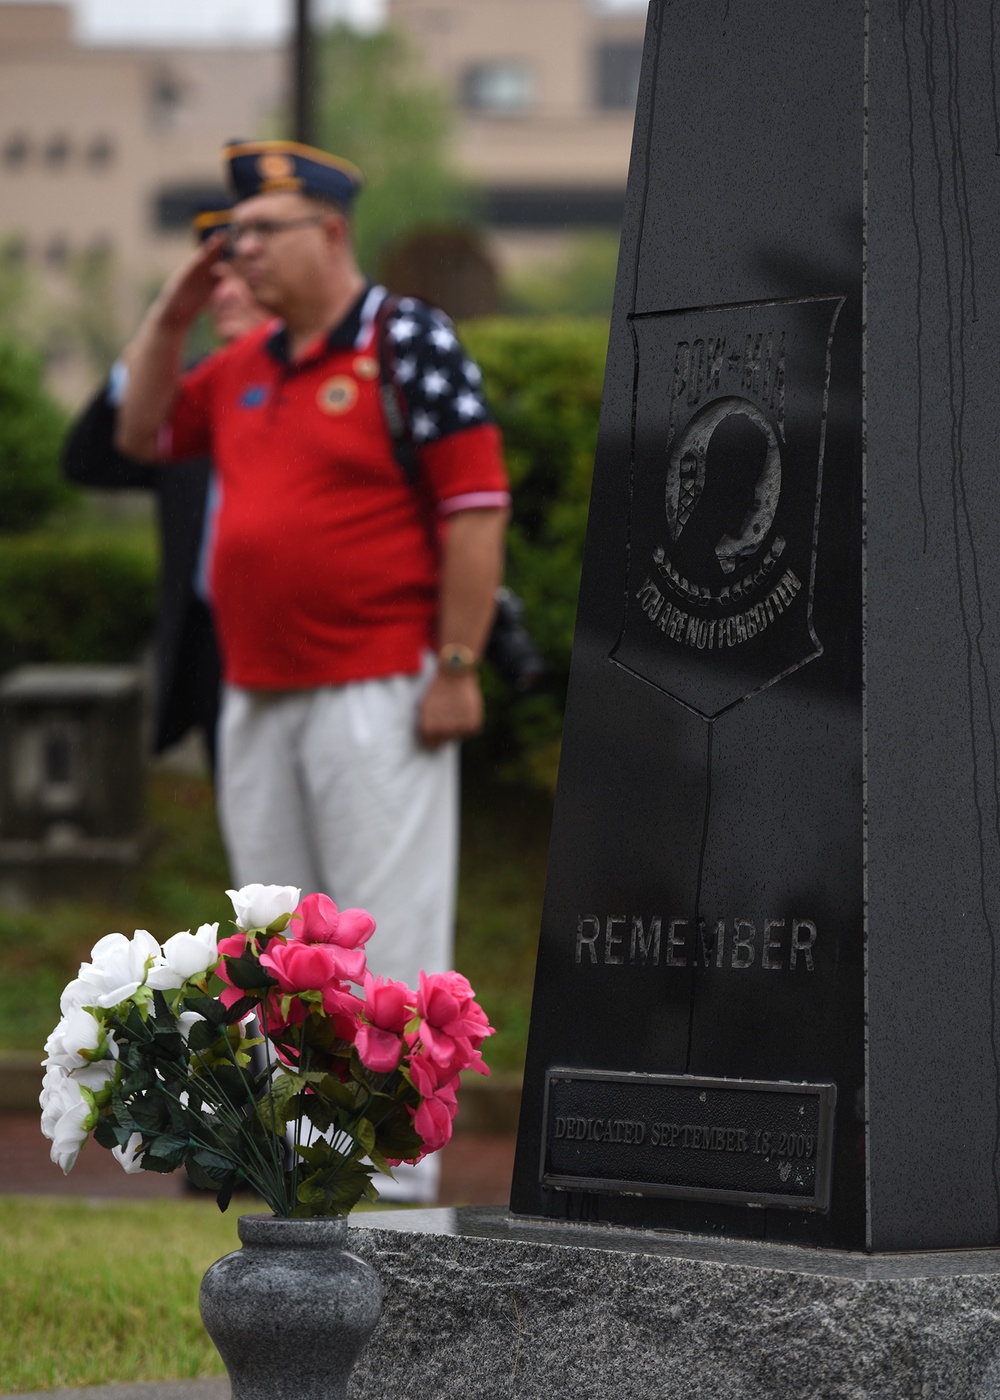 Osan remembers POW/MIA service members